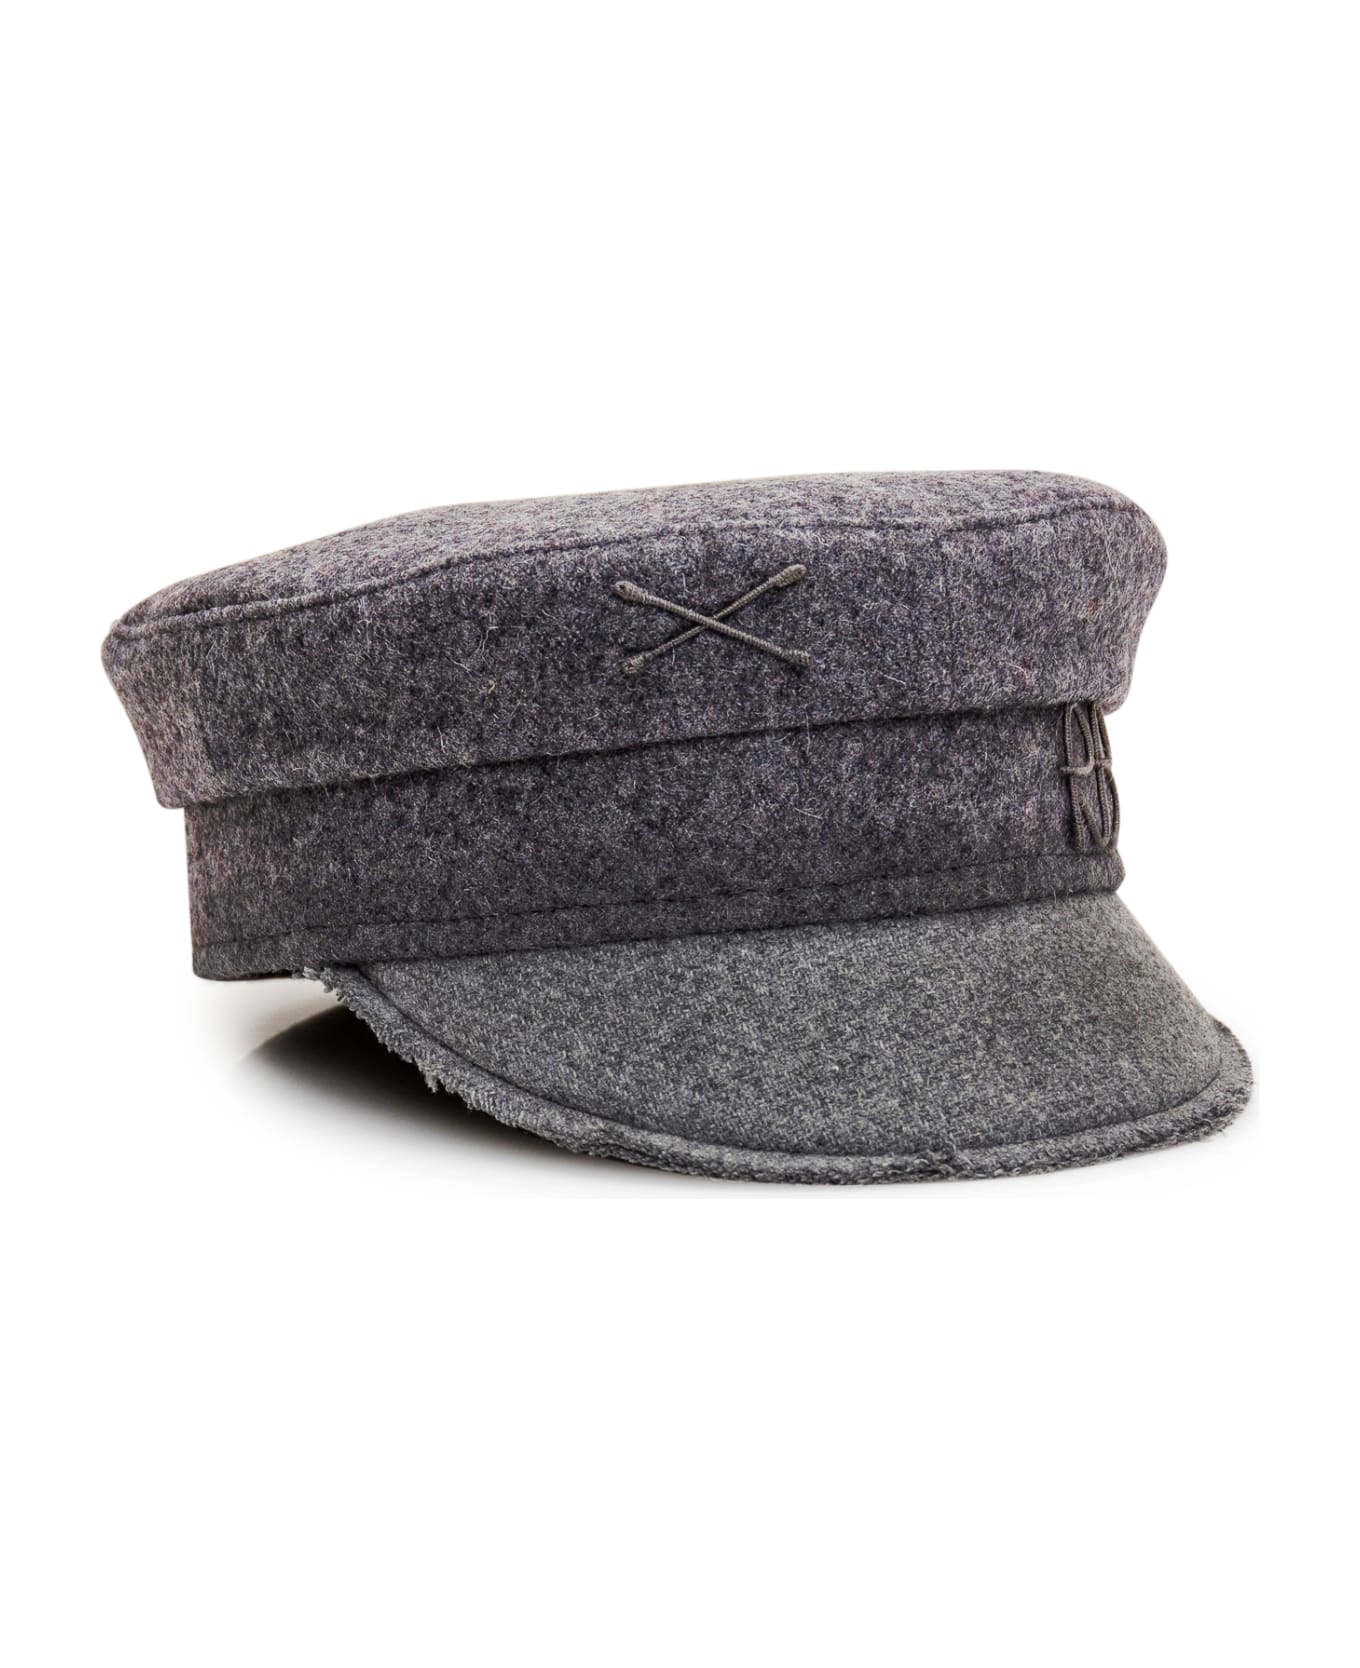 Ruslan Baginskiy Baker Boy Hat - MULTI GREY 帽子